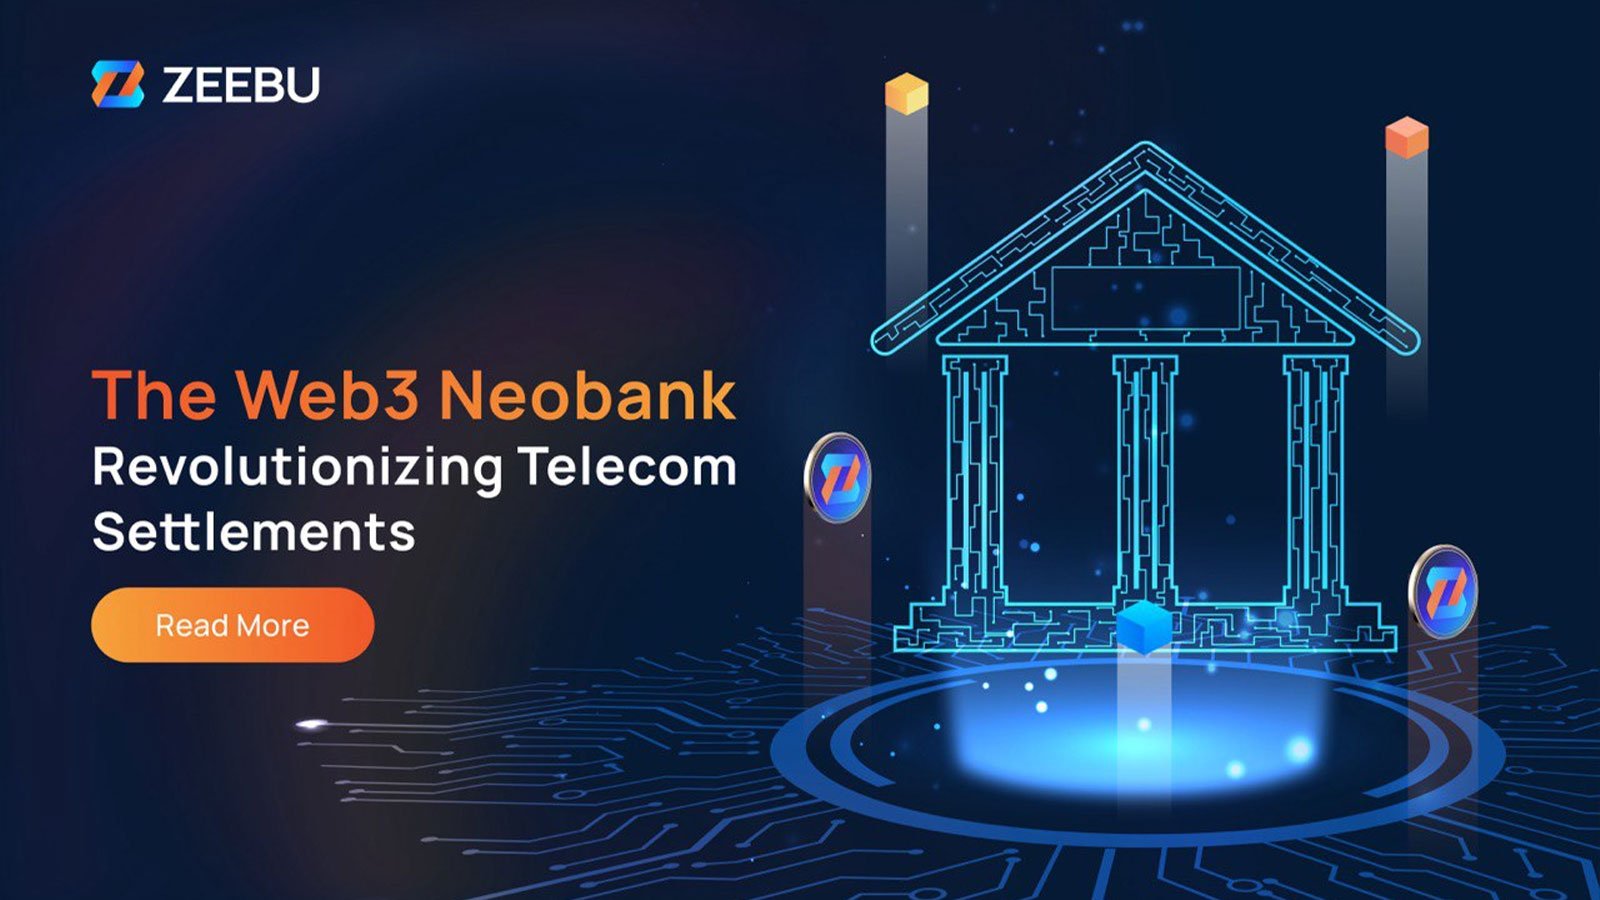 Zeebu: A Web3 Neobank Revolutionizing Telecom Settlements